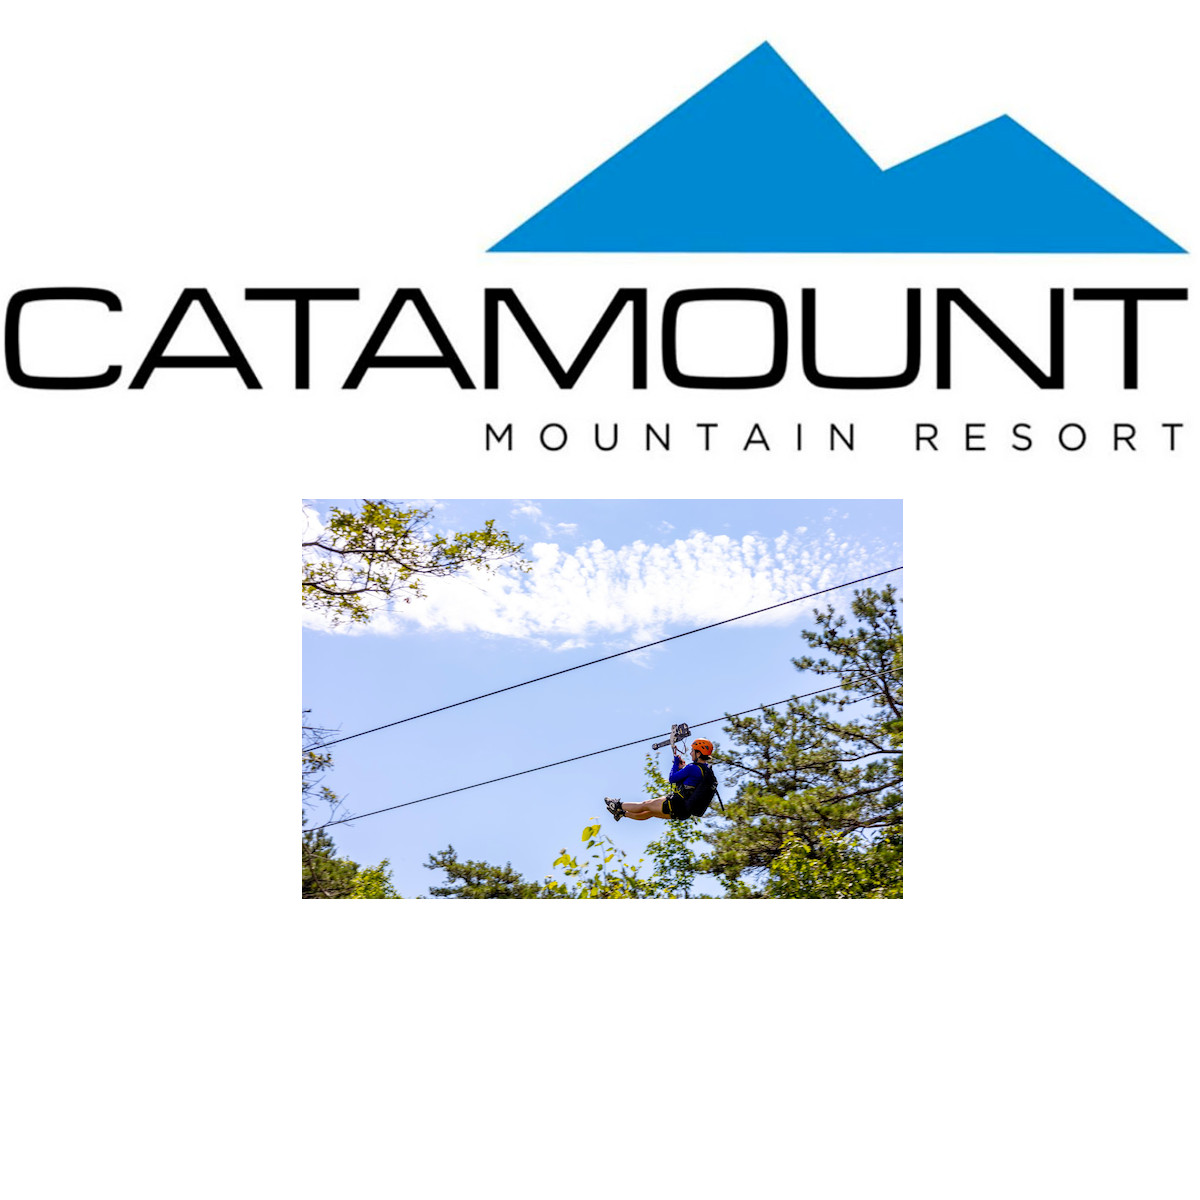 Catamount Logo and Zip Line